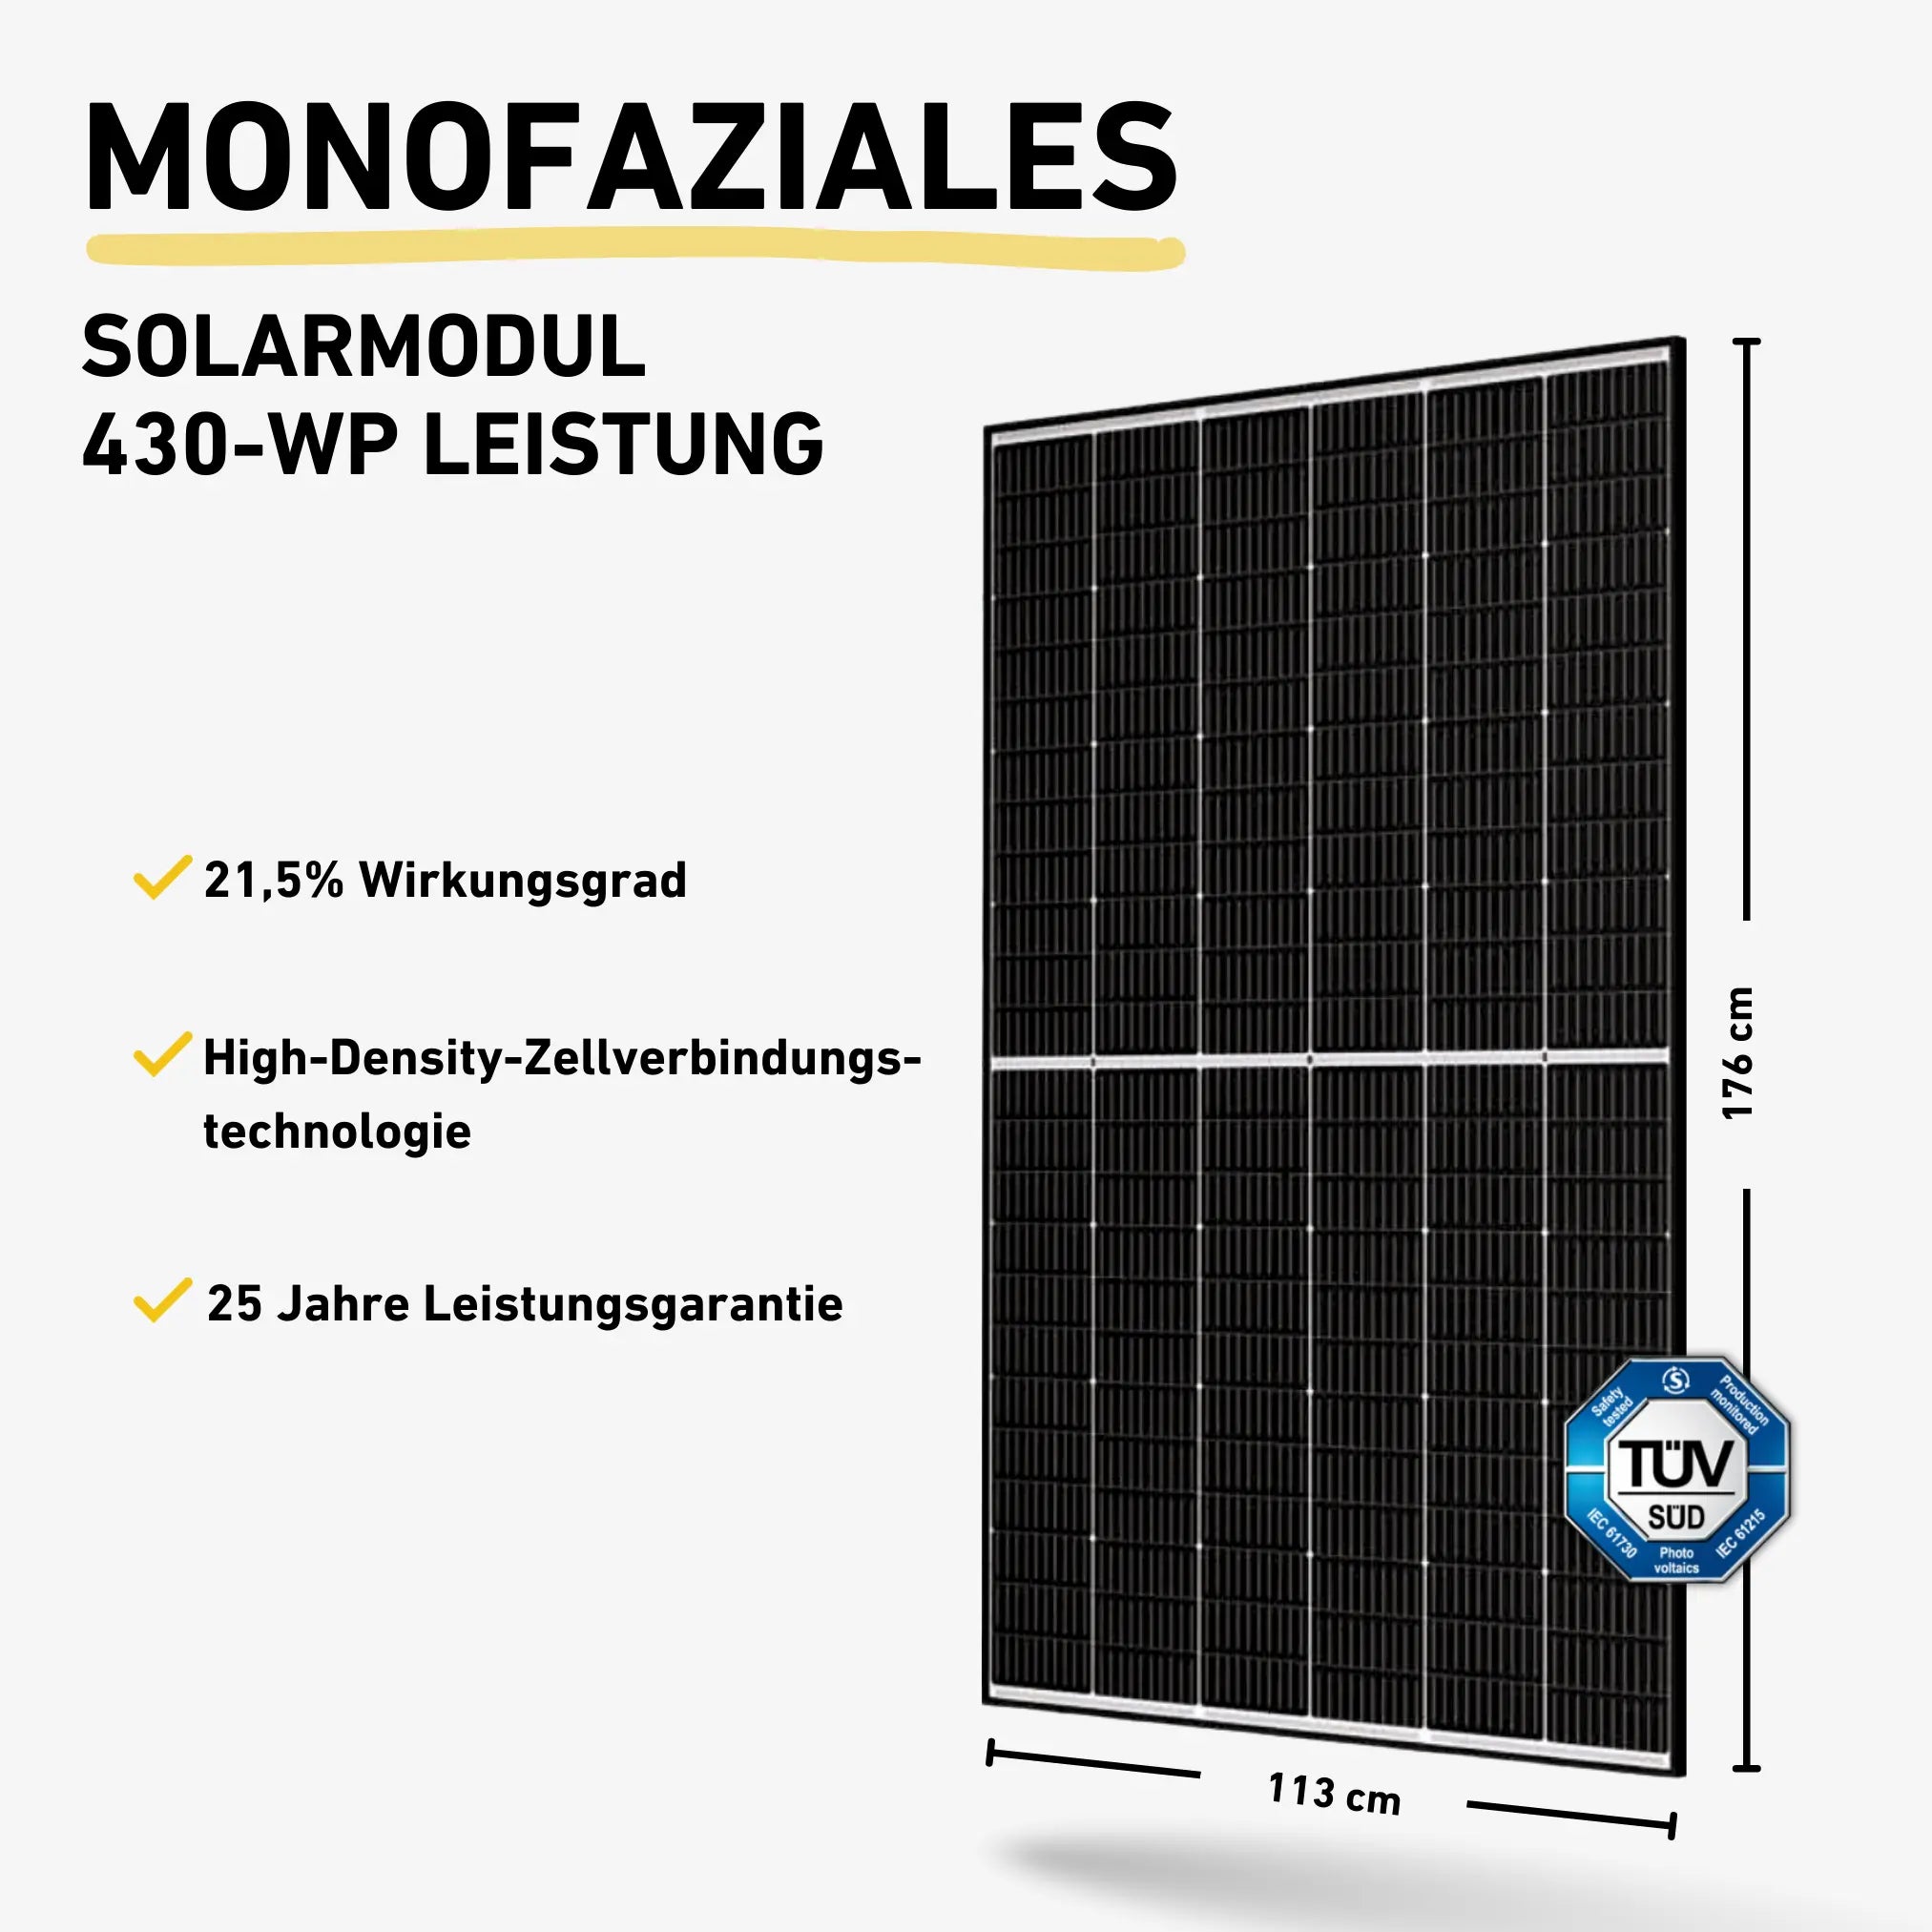 Balkonstrom Basic Monofaziales Solarmodul Produktbild 430-WP Leistung